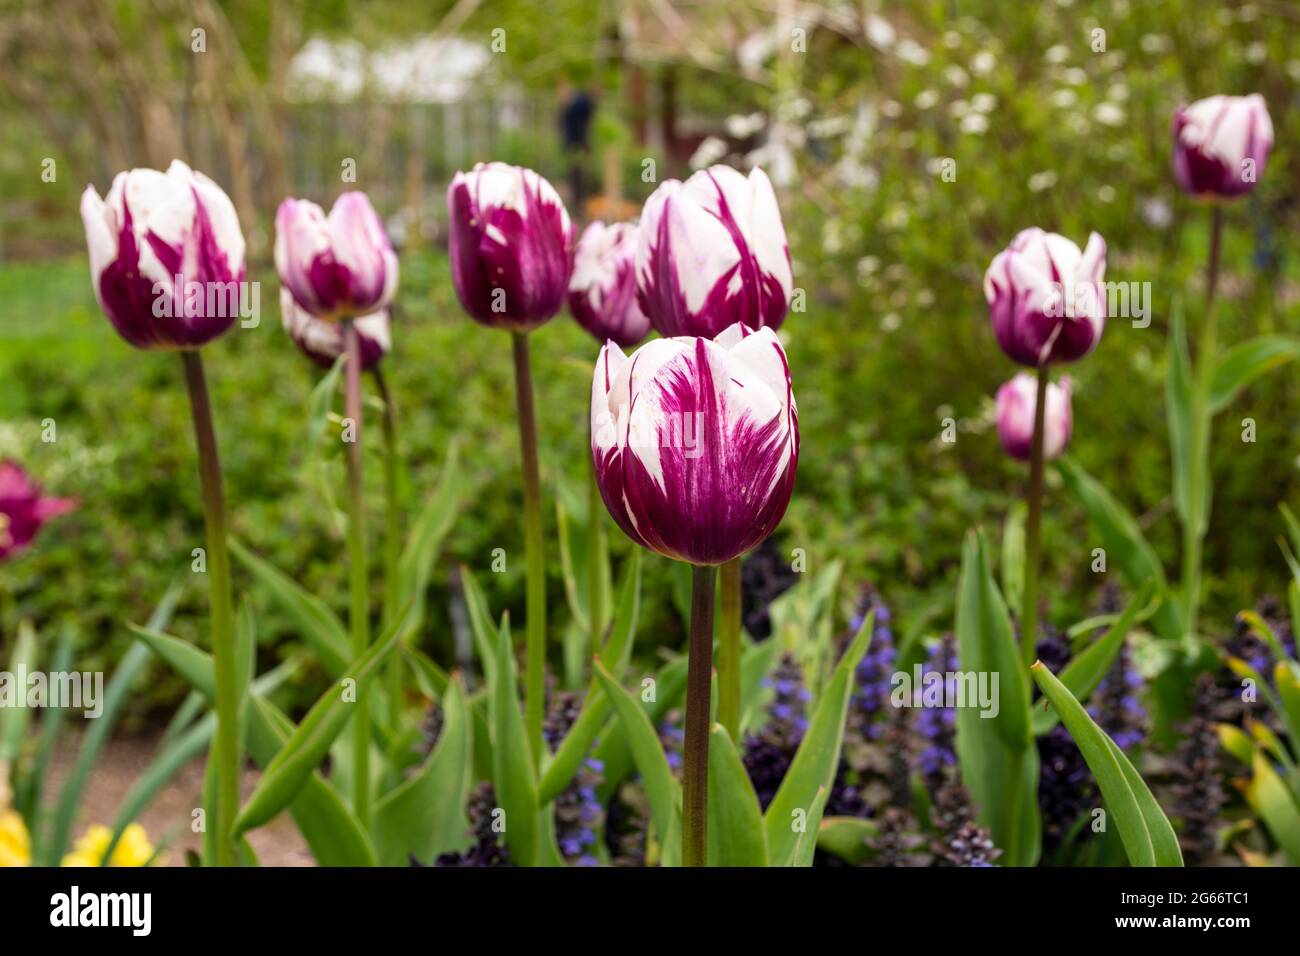 Triumph tulip in a public garden in Gothenburg with background off focus. Stock Photo